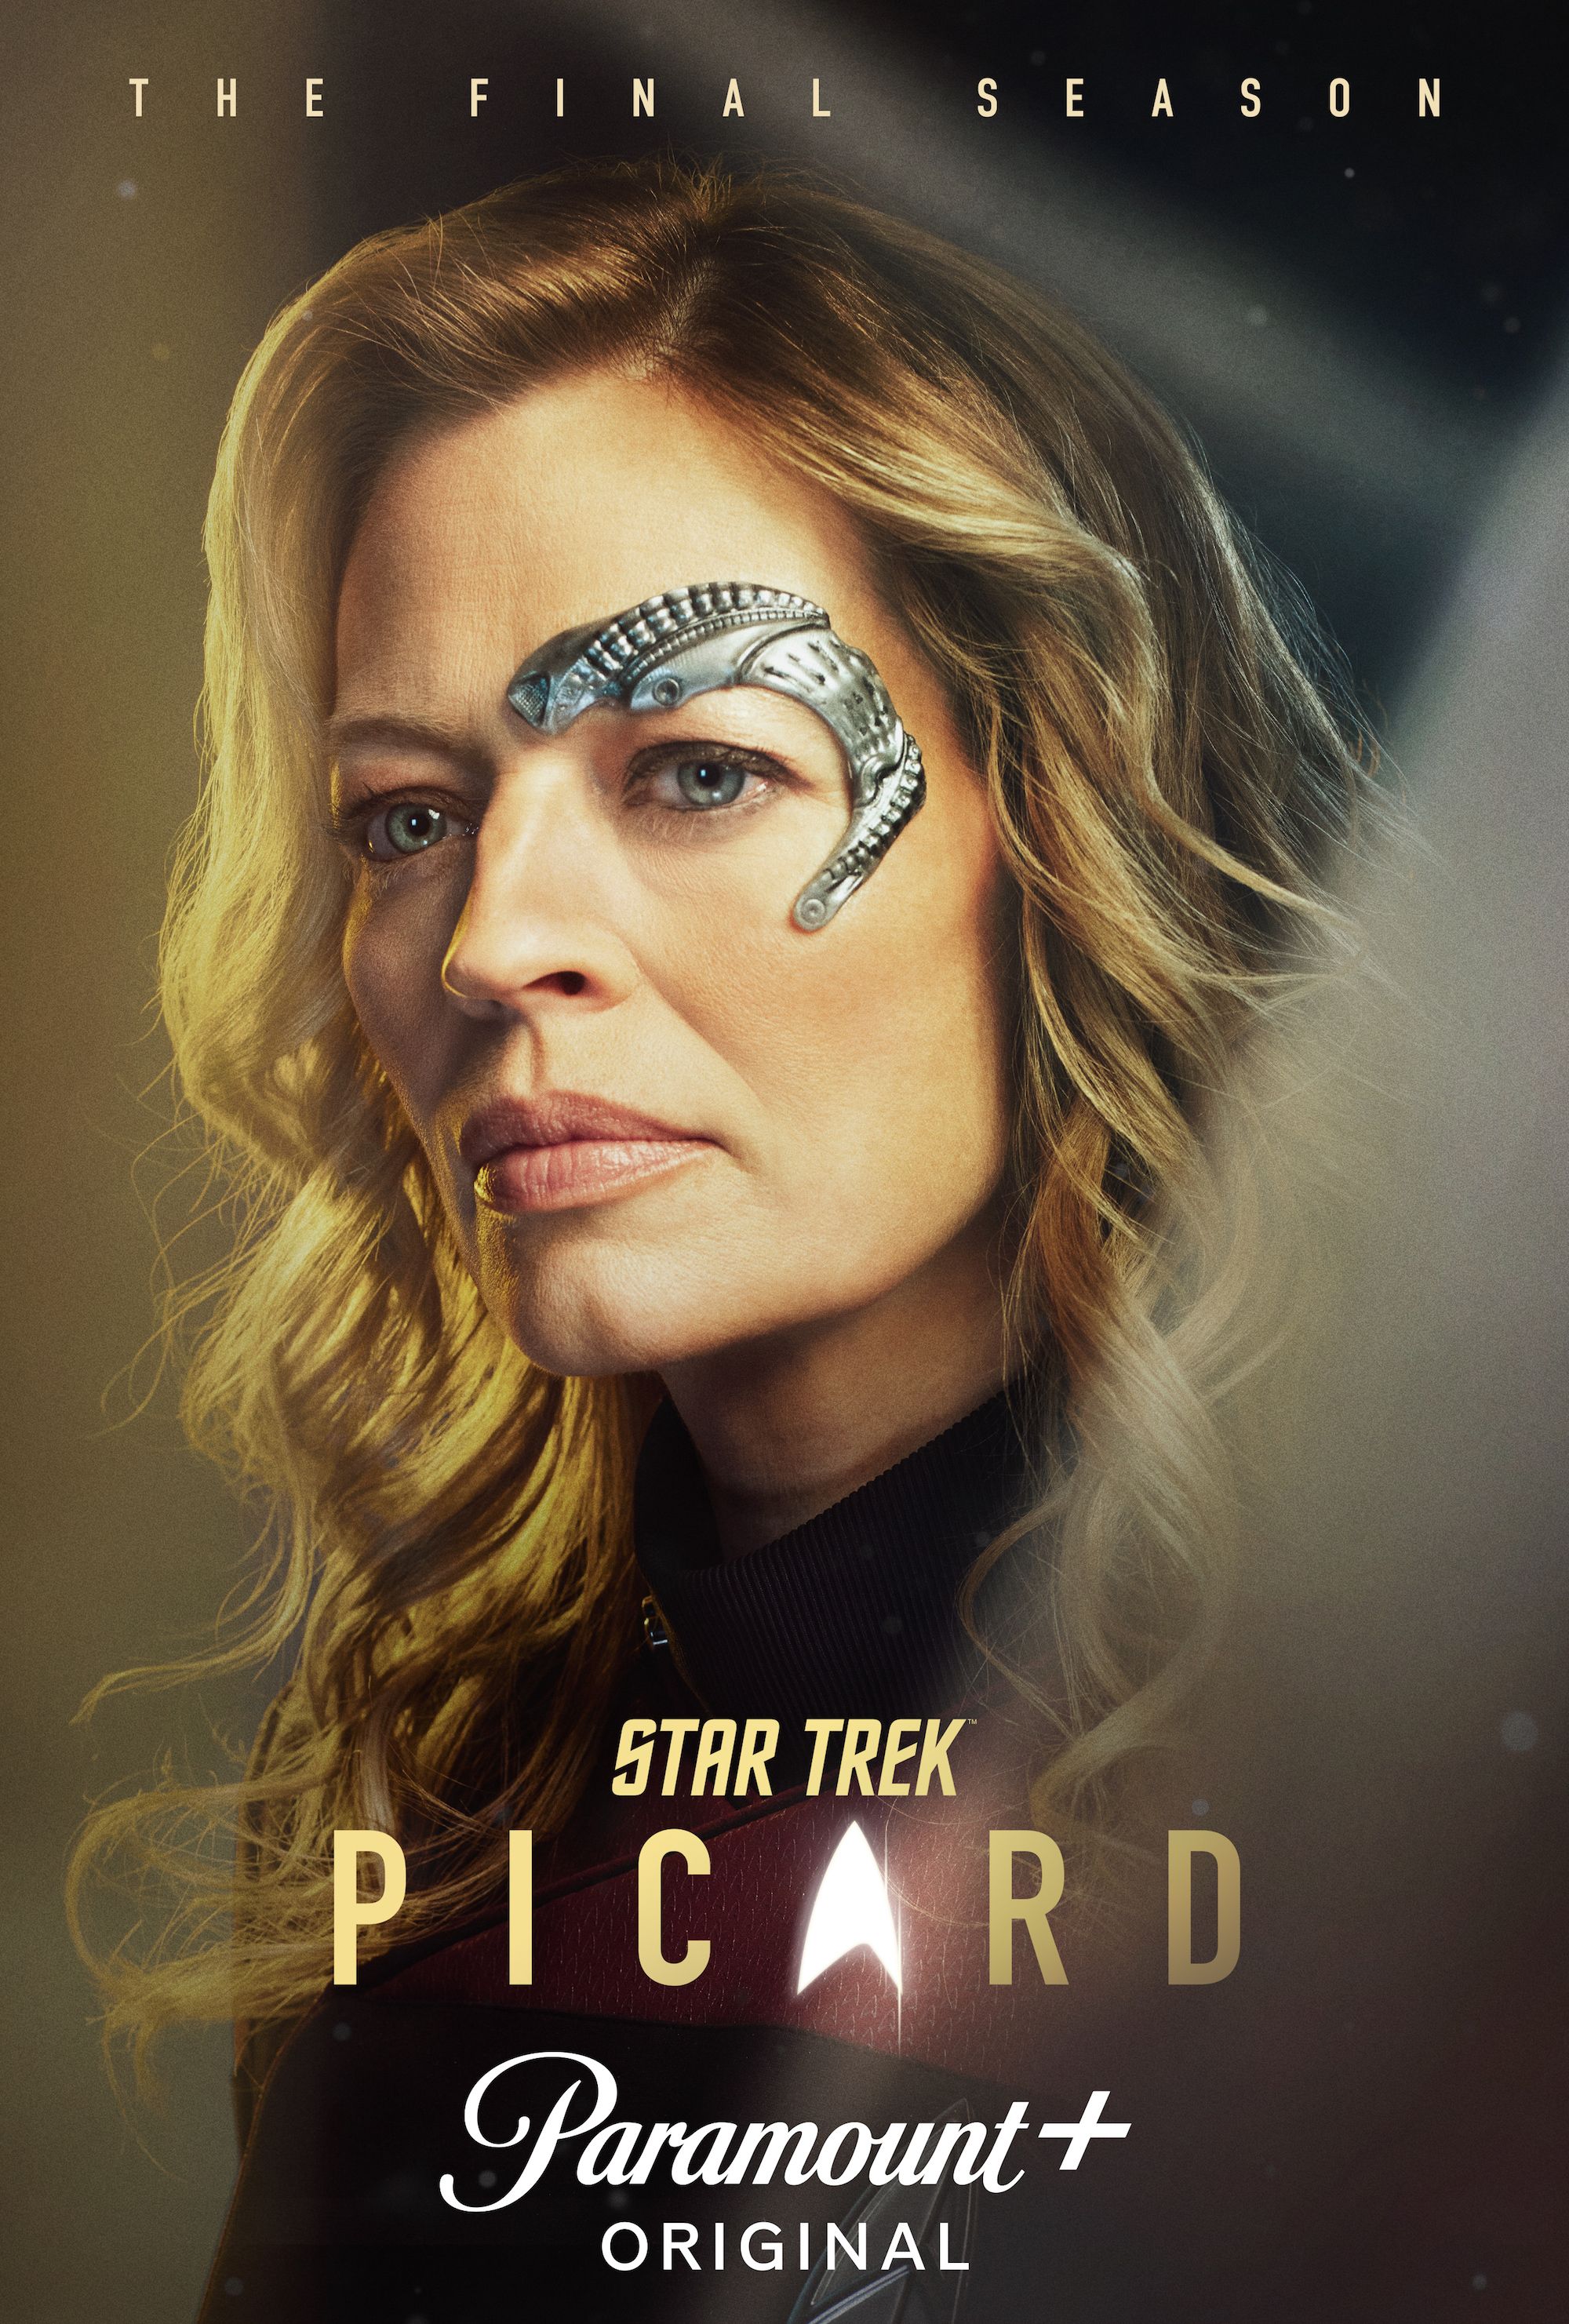 Jeri Ryan as Seven of Nine in Star Trek Picard Season 3